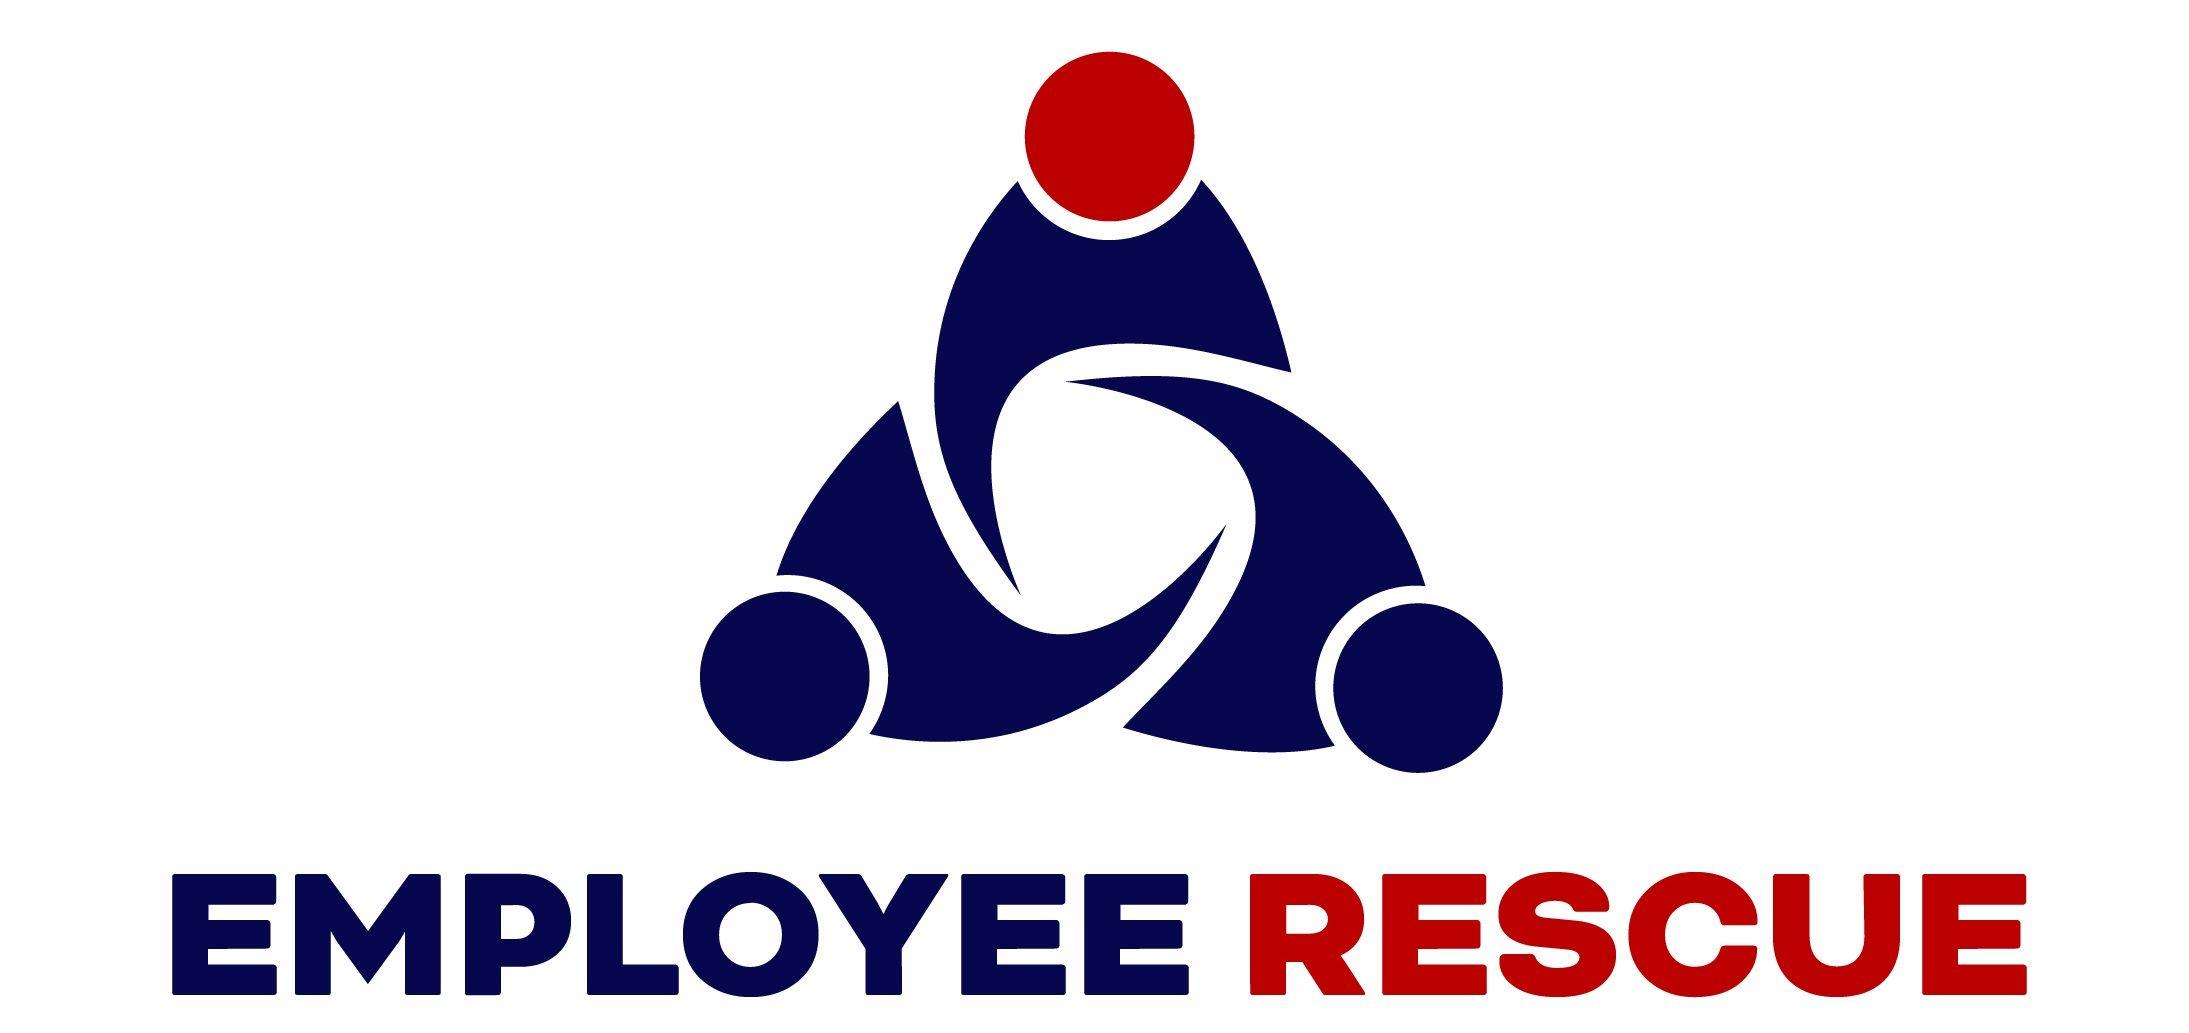 Employee Logo - Employee Rescue Book Shop - shop